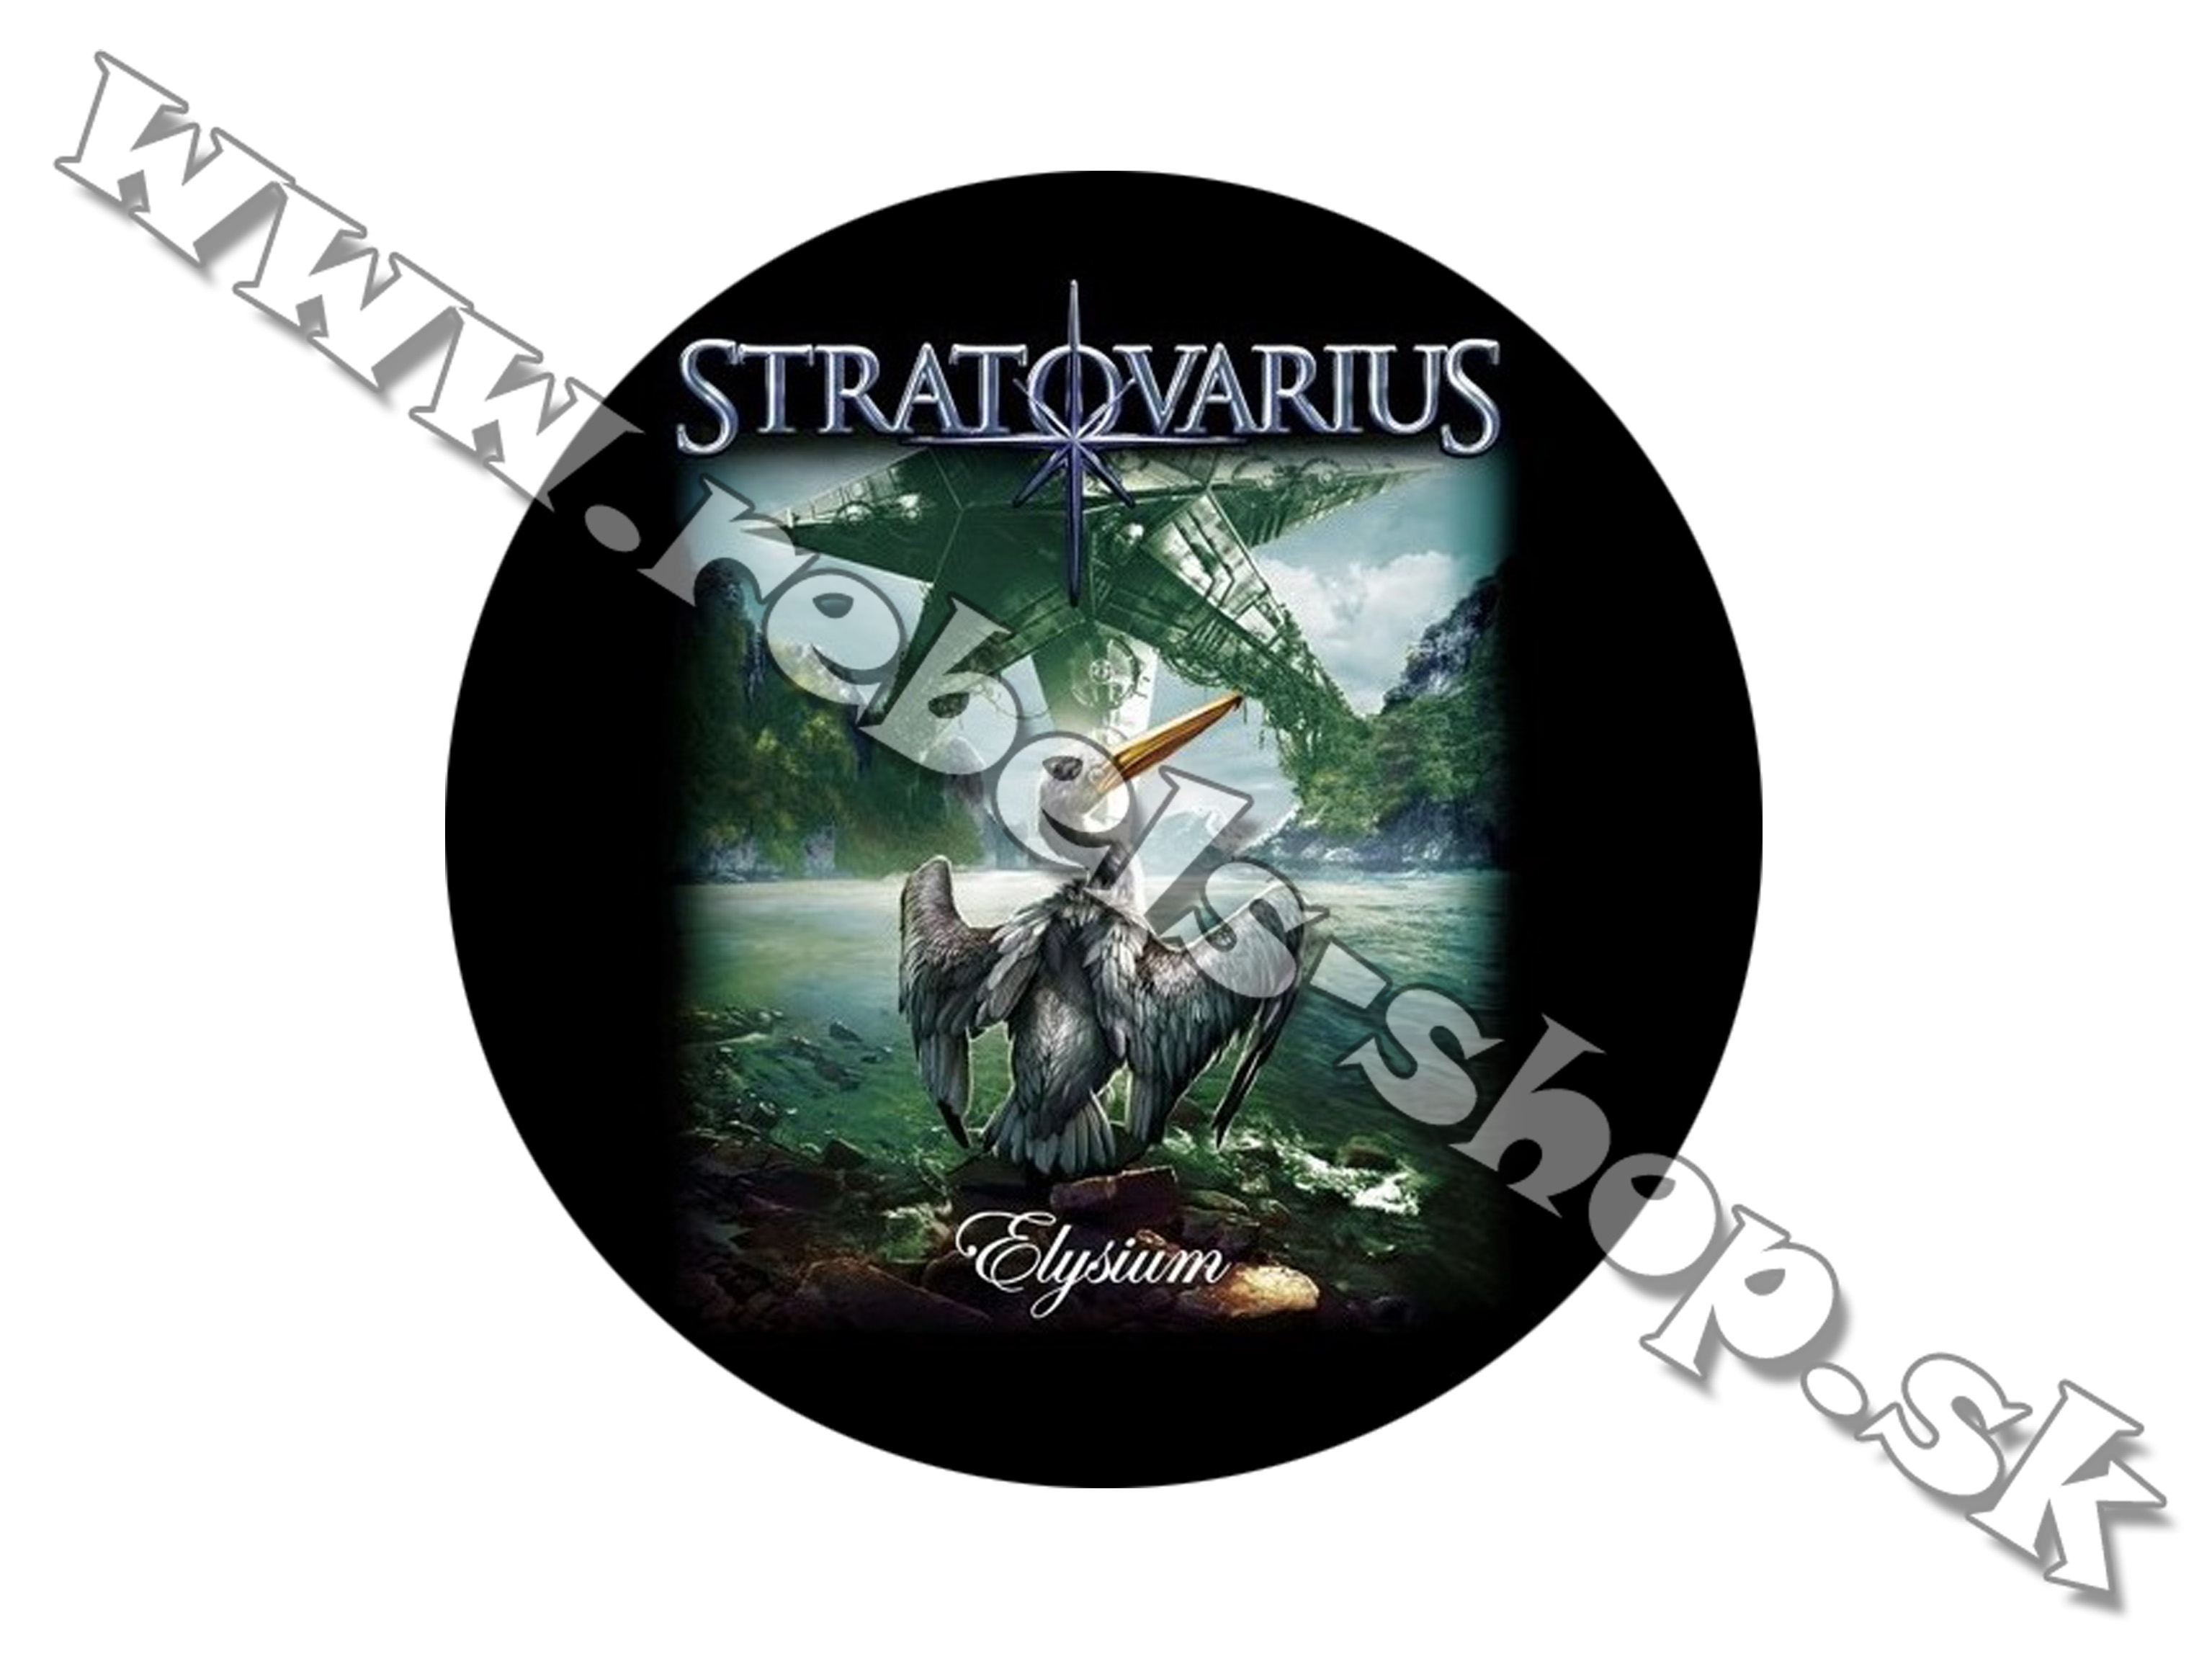 Odznak "Stratovarius"